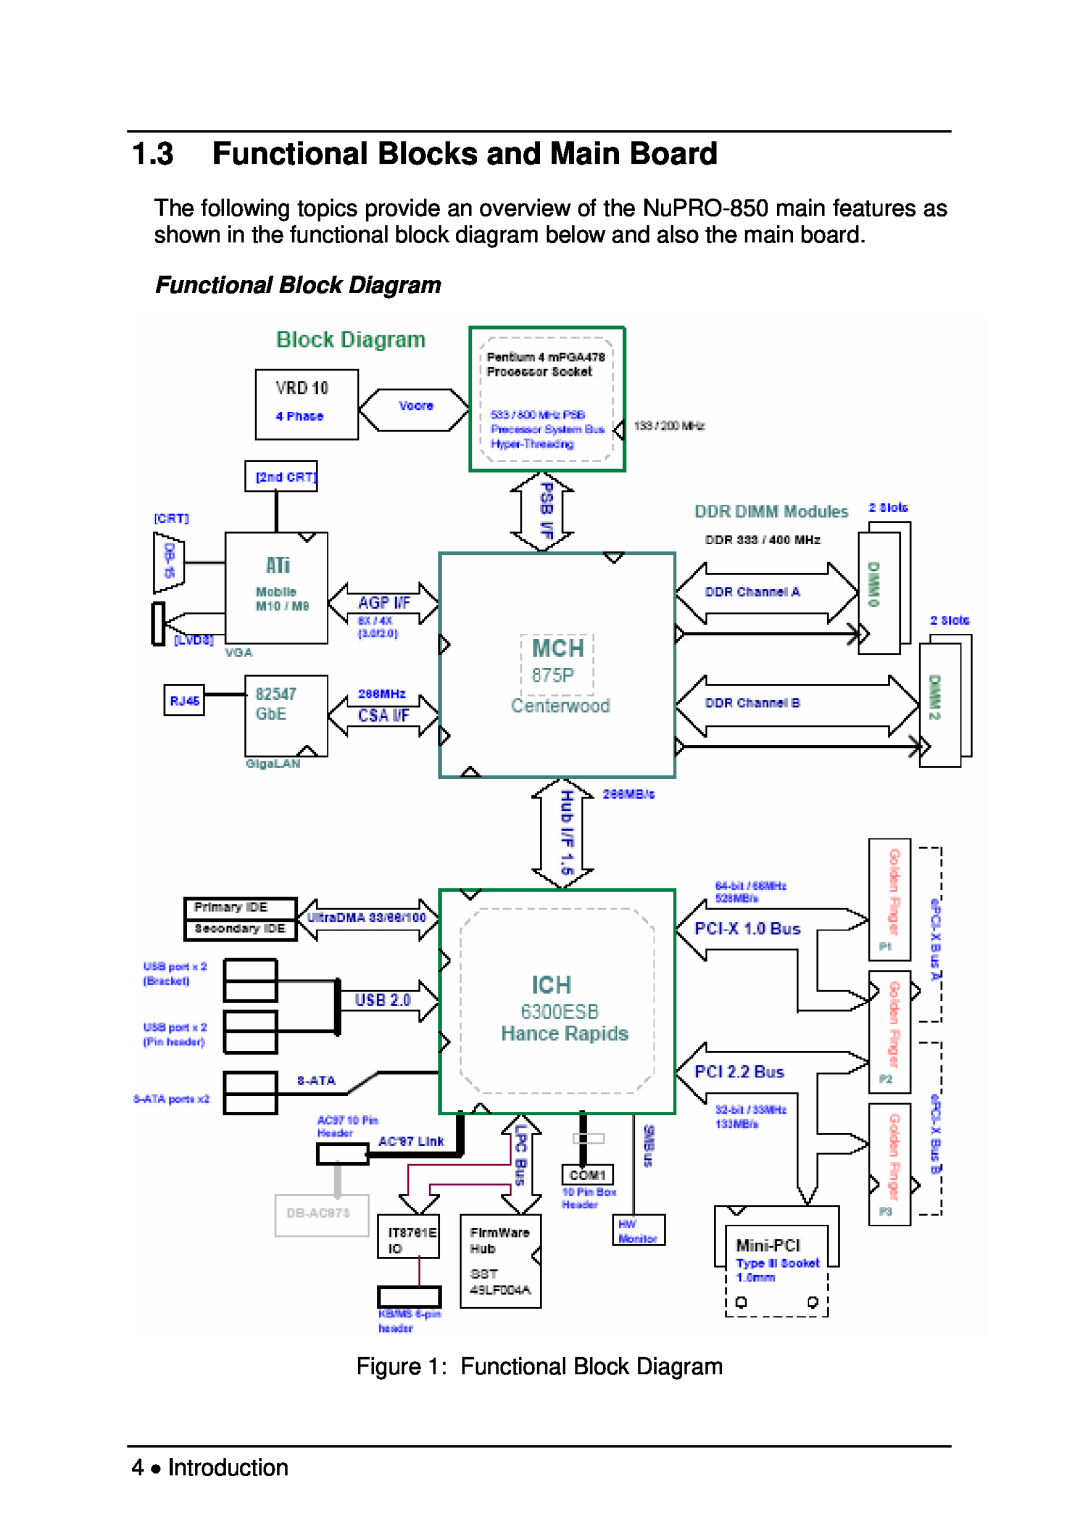 Intel NuPRO-850 user manual Functional Blocks and Main Board, Functional Block Diagram 